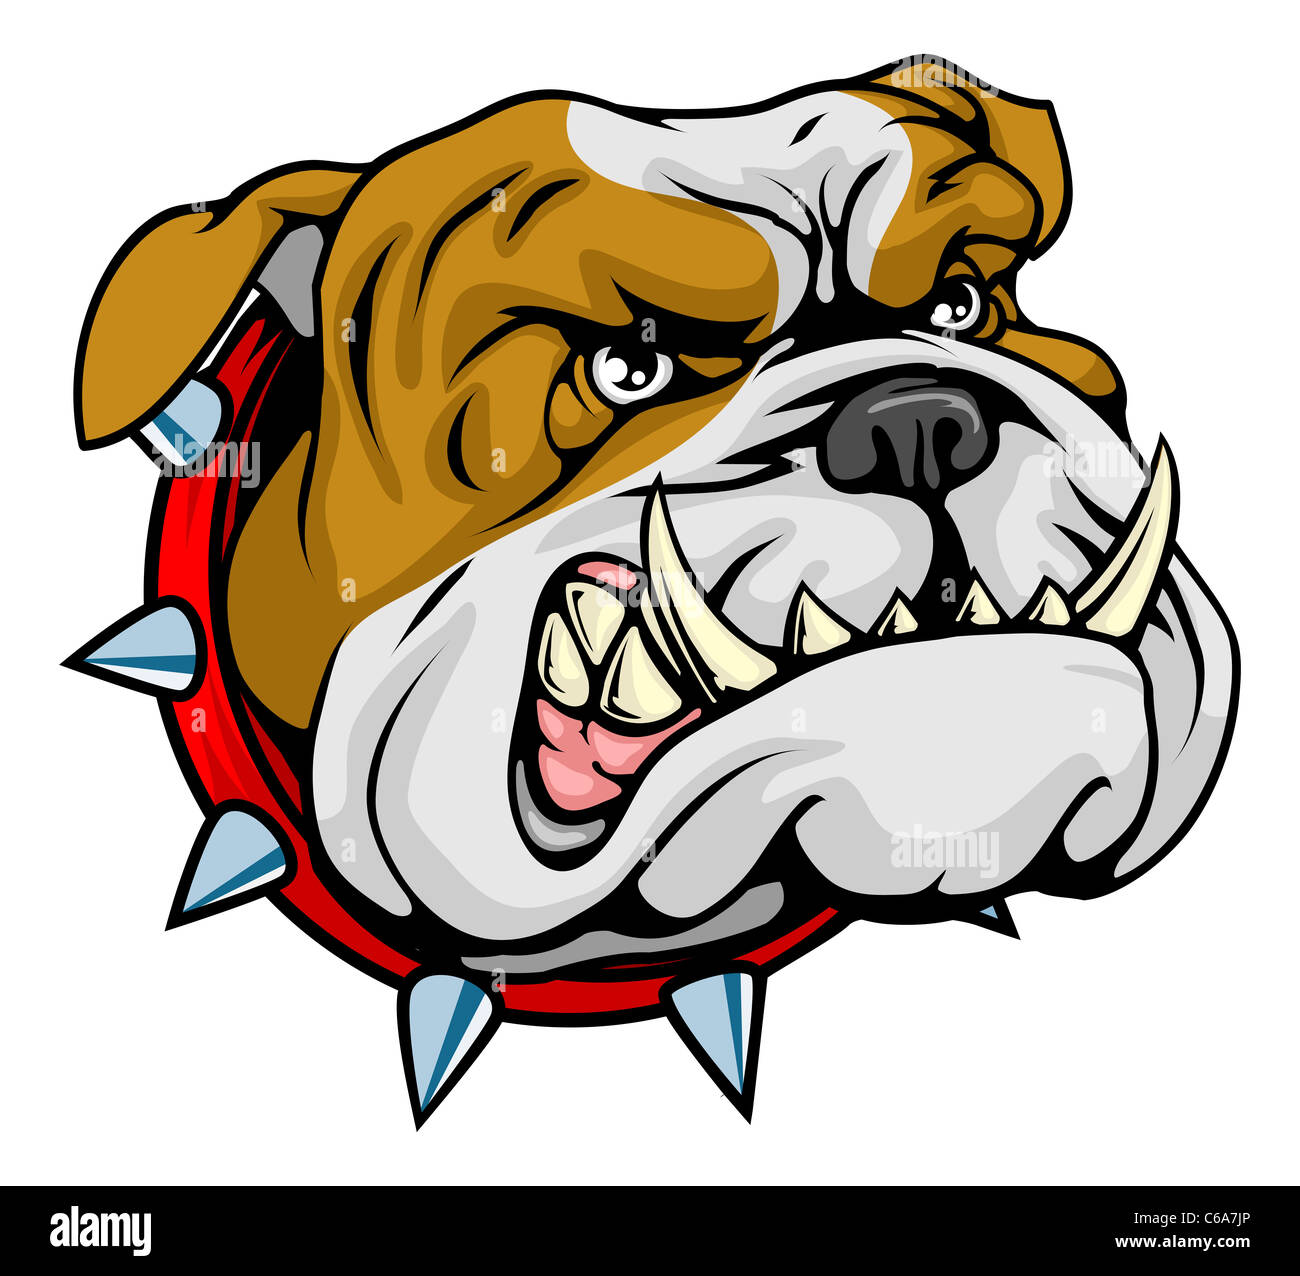 Mean looking illustration of classic British bulldog face Stock Photo